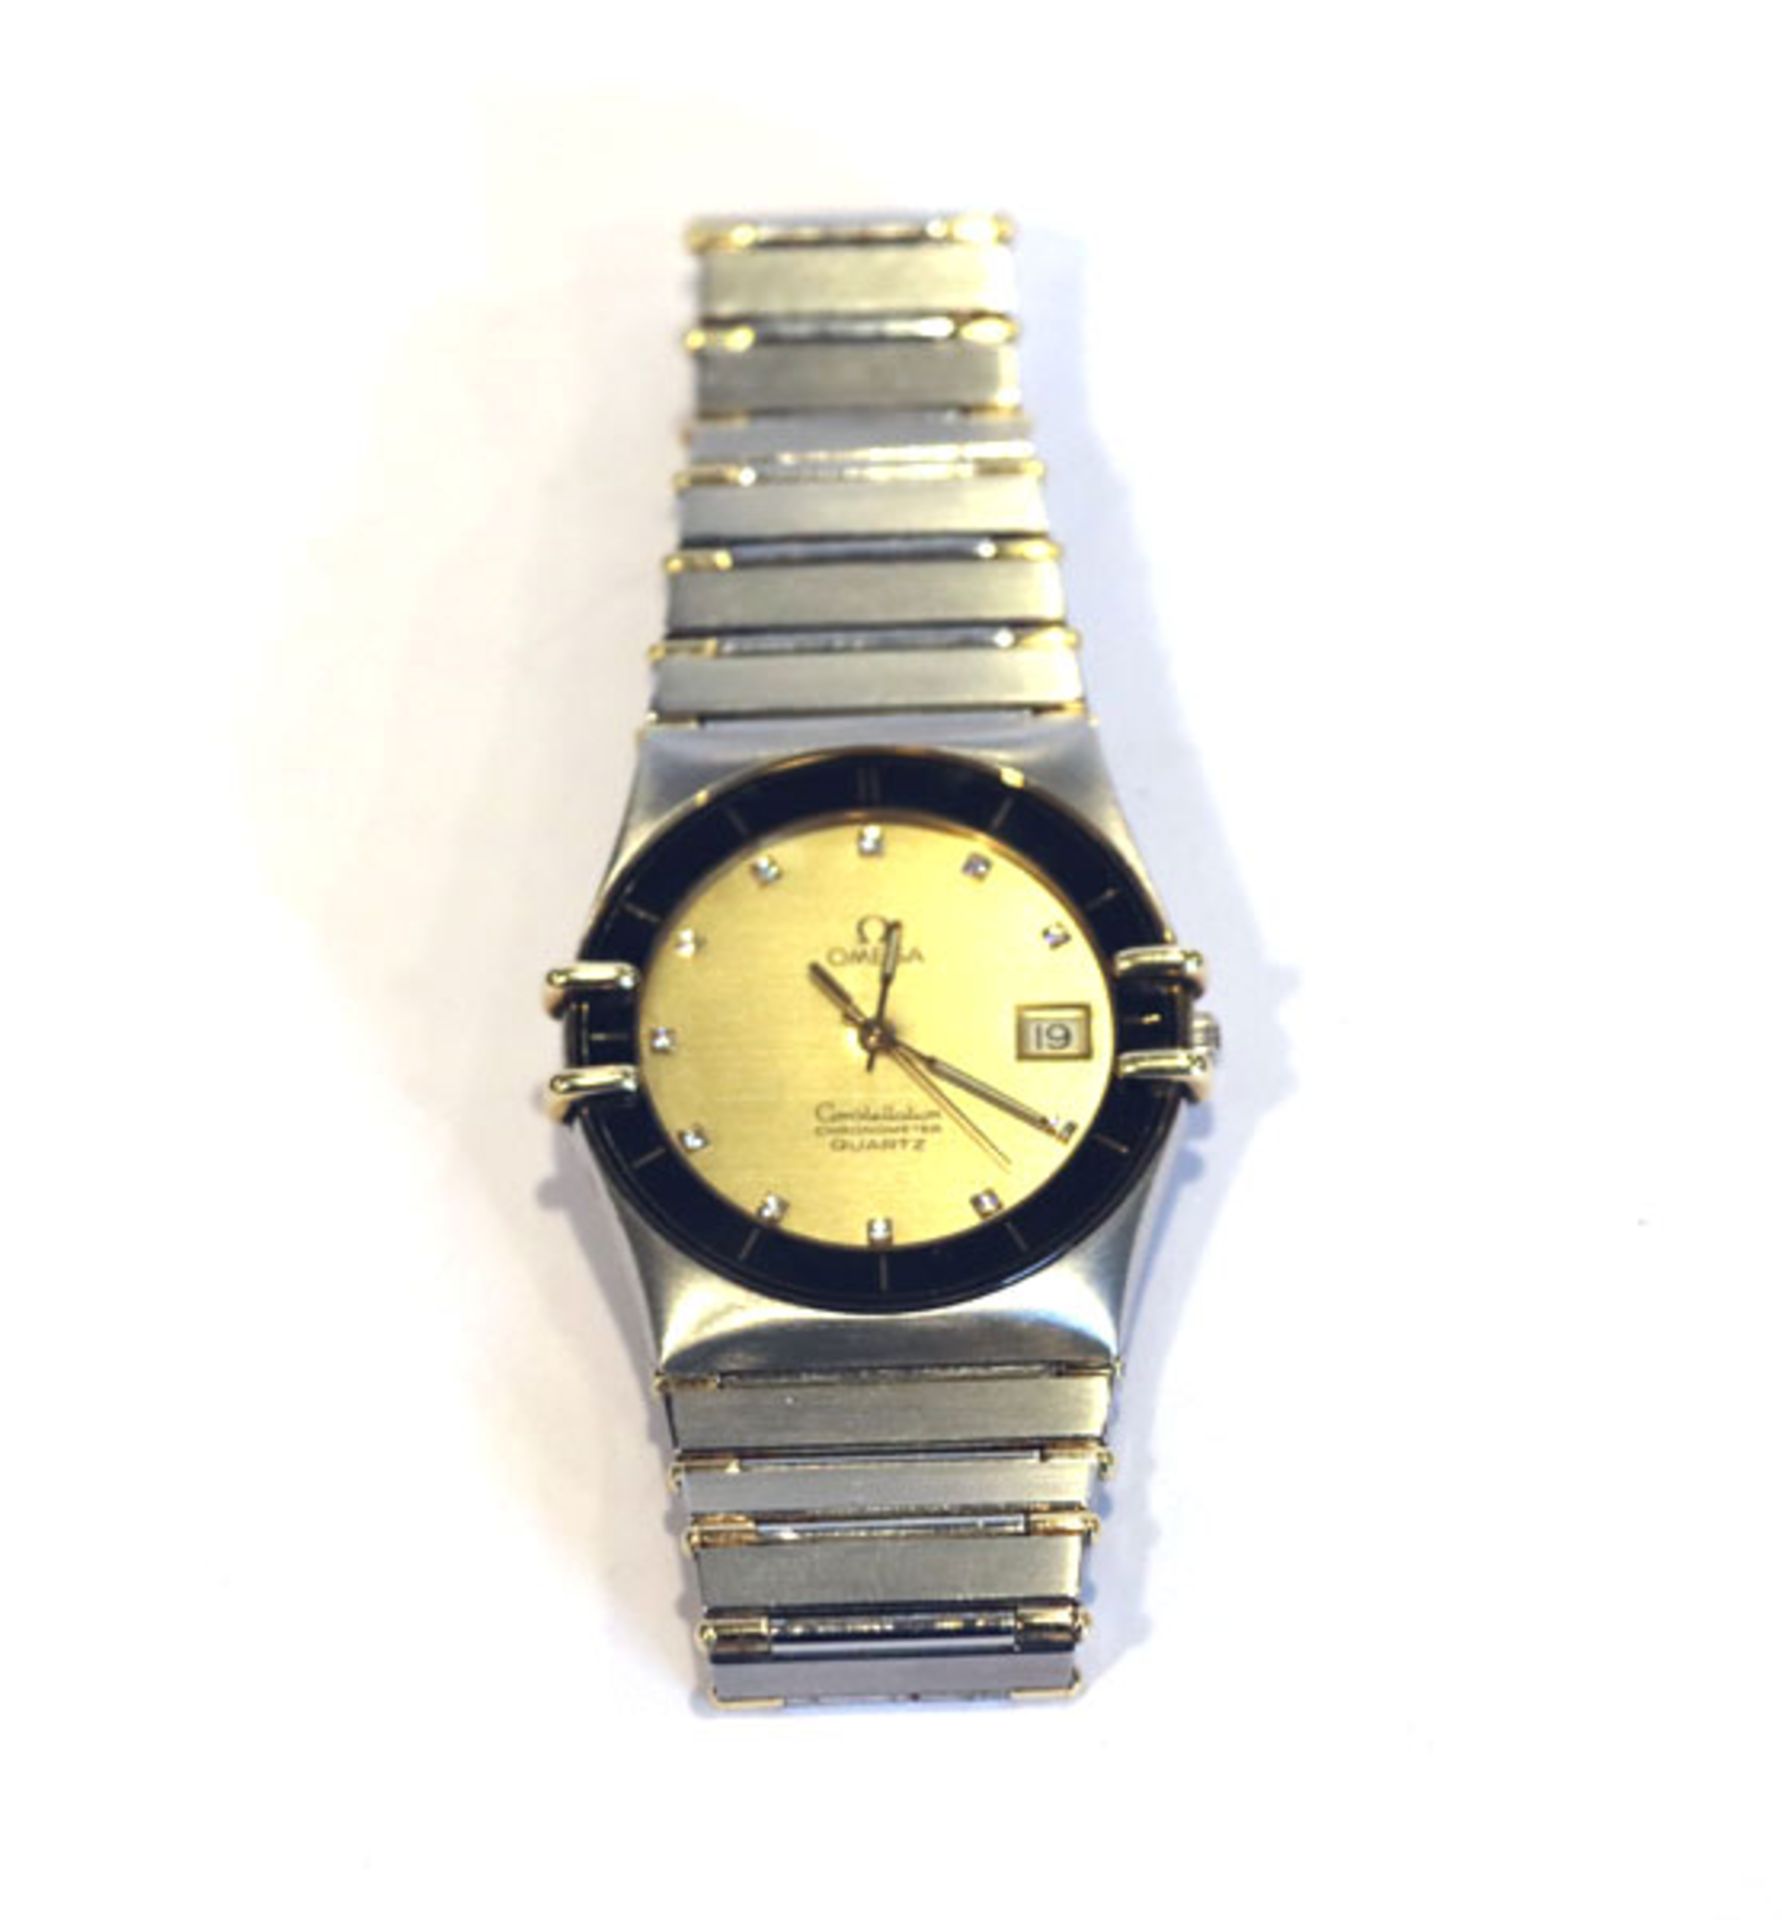 Omega Constellation Armbanduhr, Stahl/Gold Chronometer Quartz, Datumsanzeige, Zifferblatt mit 11